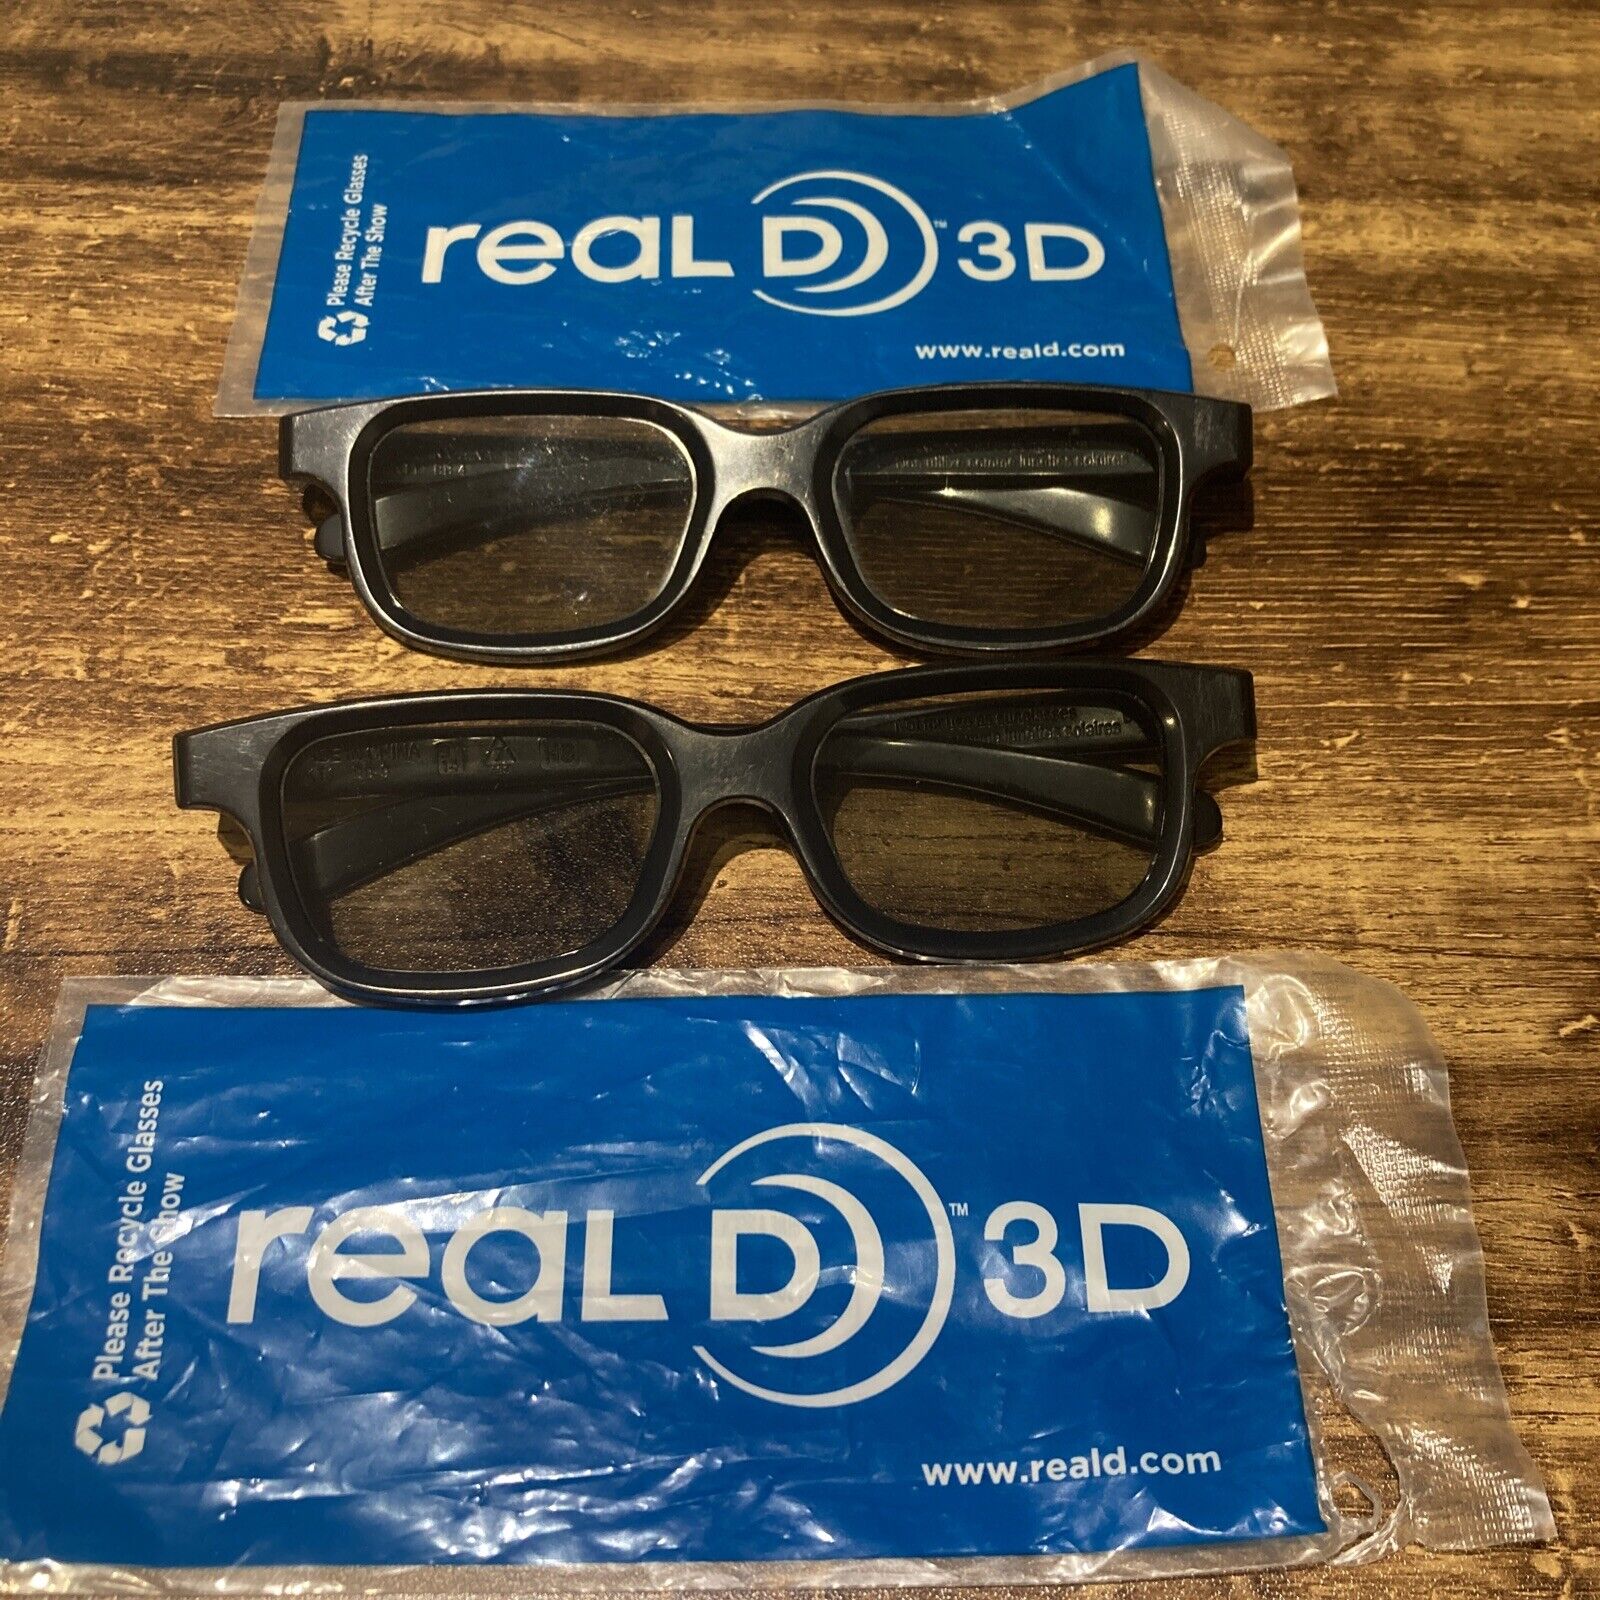 ben kollasch recommends Reald 3d Glasses Video